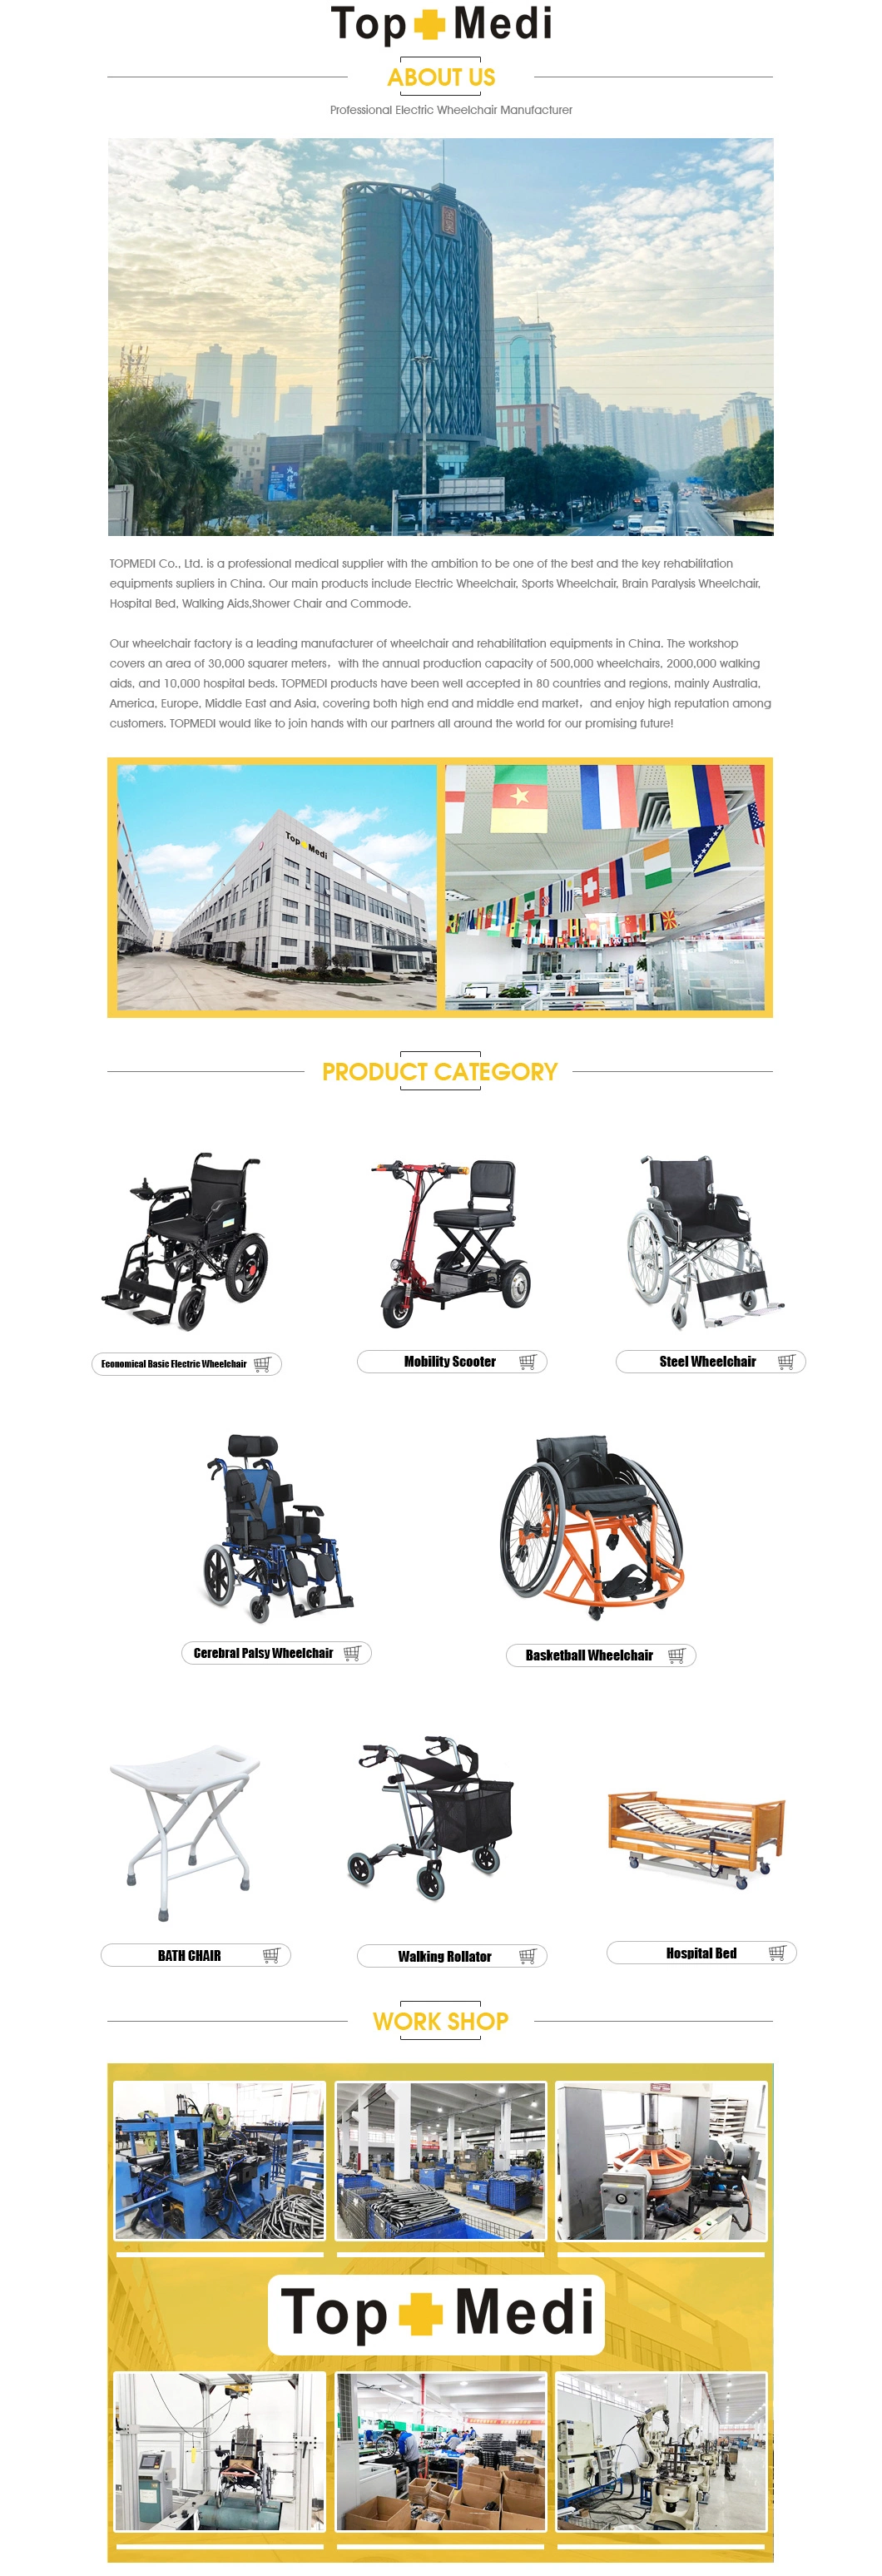 Cheap 100kg Folding Topmedi Manual Standing Wheel Chair Foldable Portable Electric Price Wheelchair